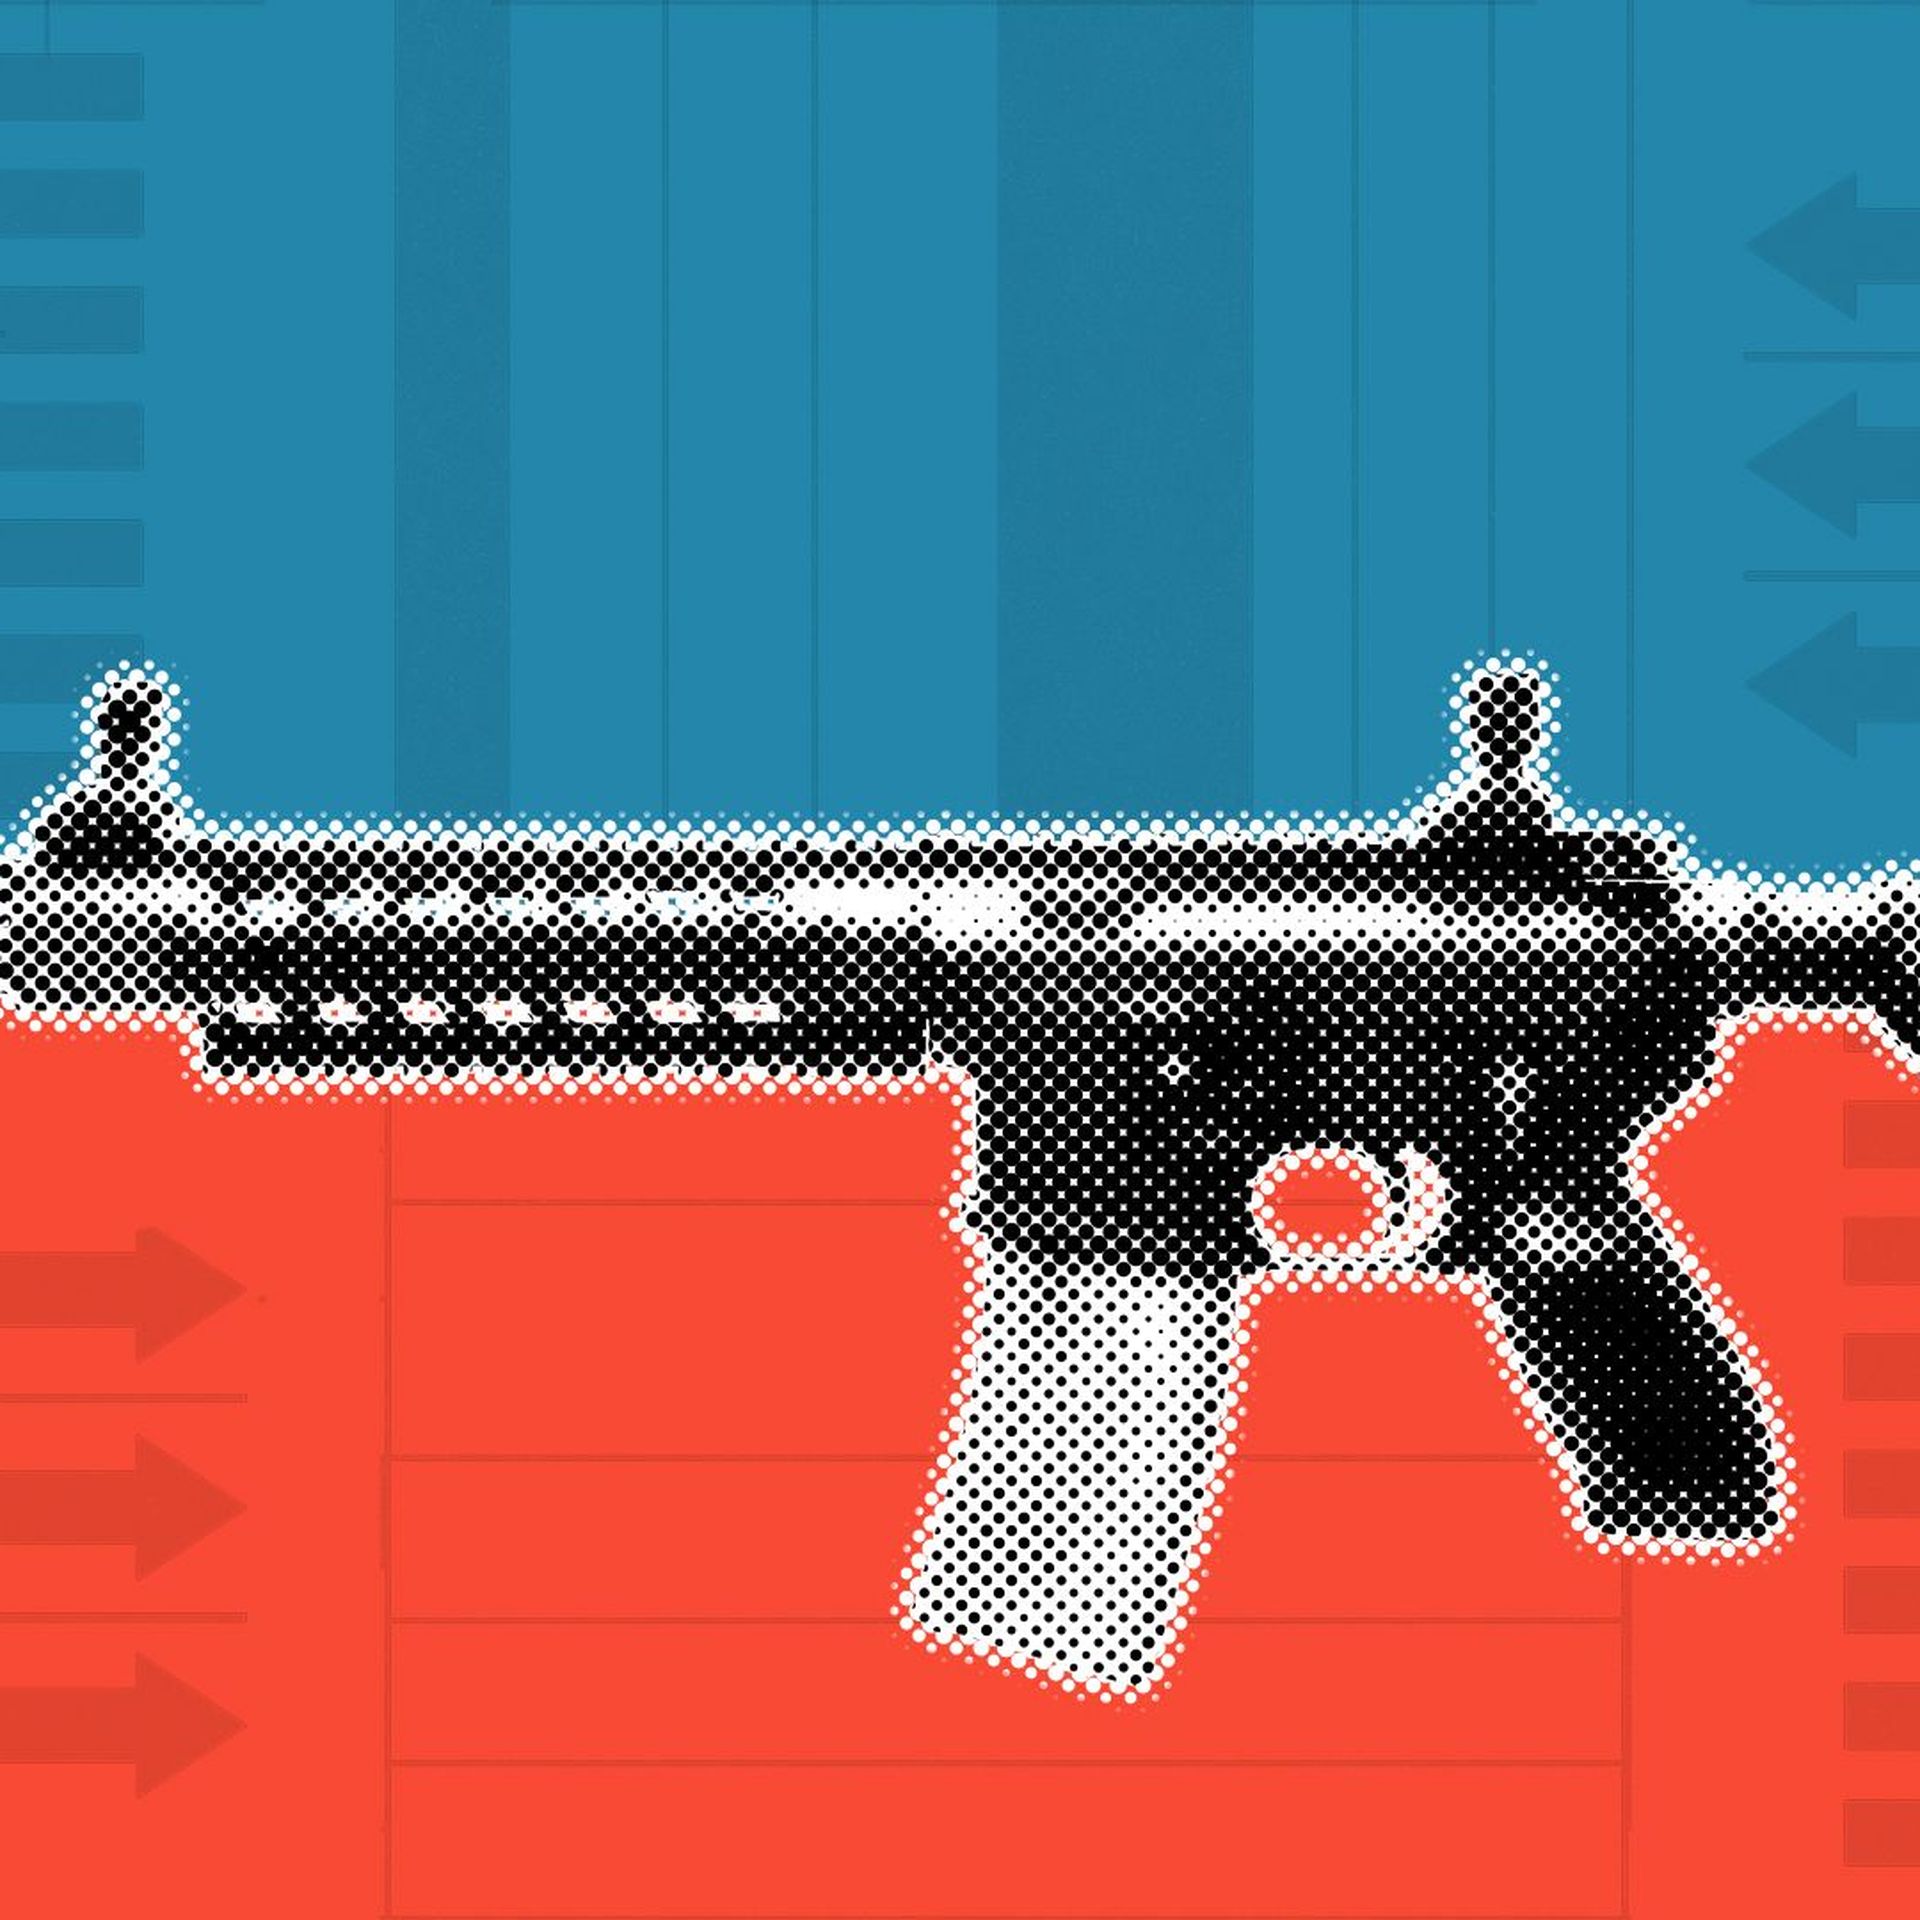 Assault weapons sales ban passes Washington state Legislature